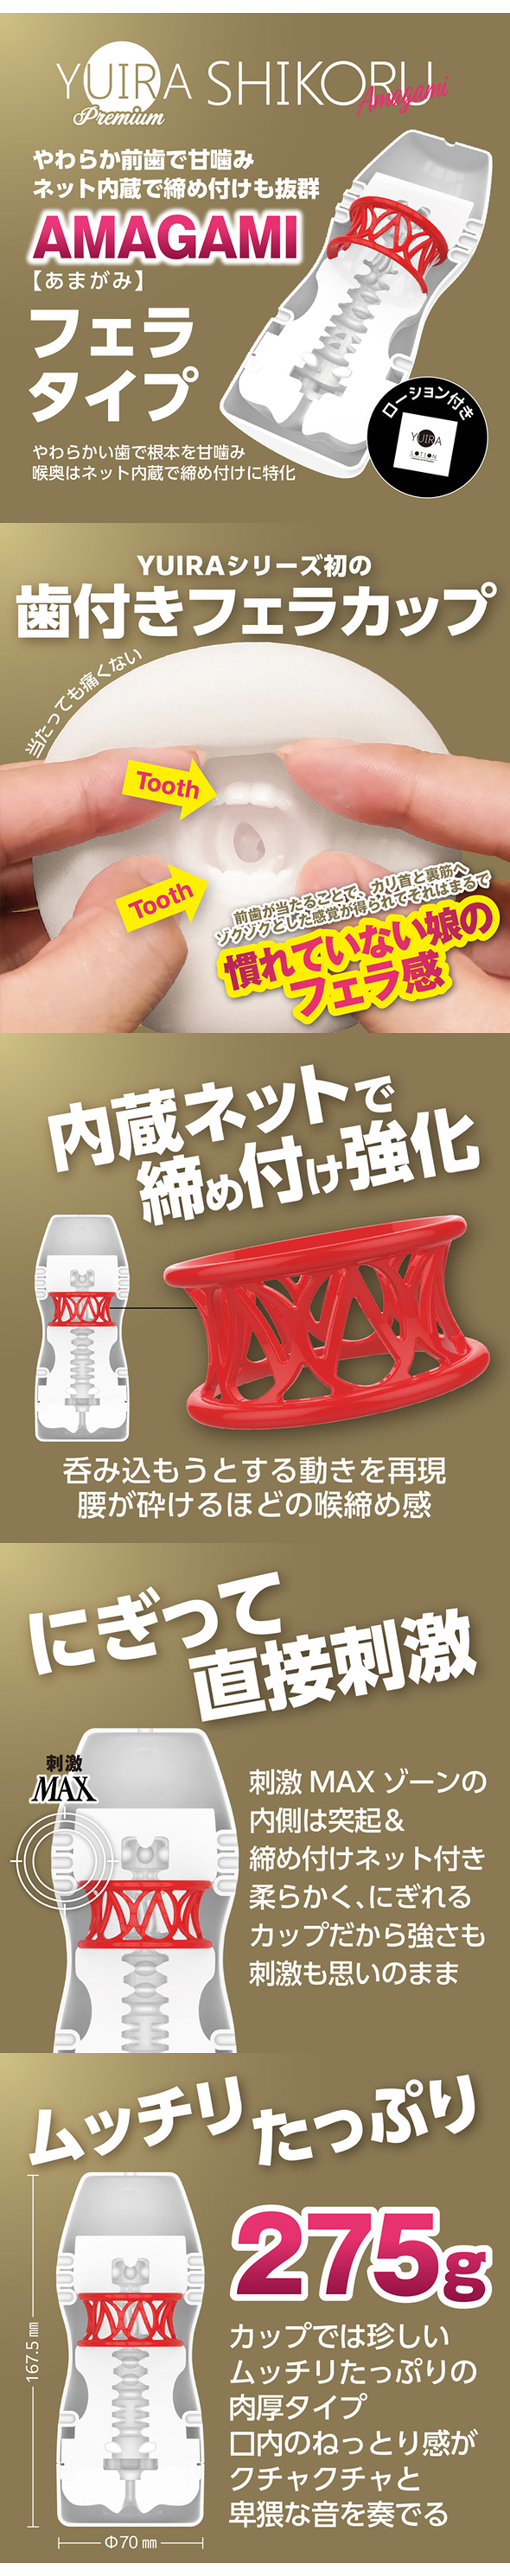 YUIRA -SHIKORU Premium- AMAGAMI